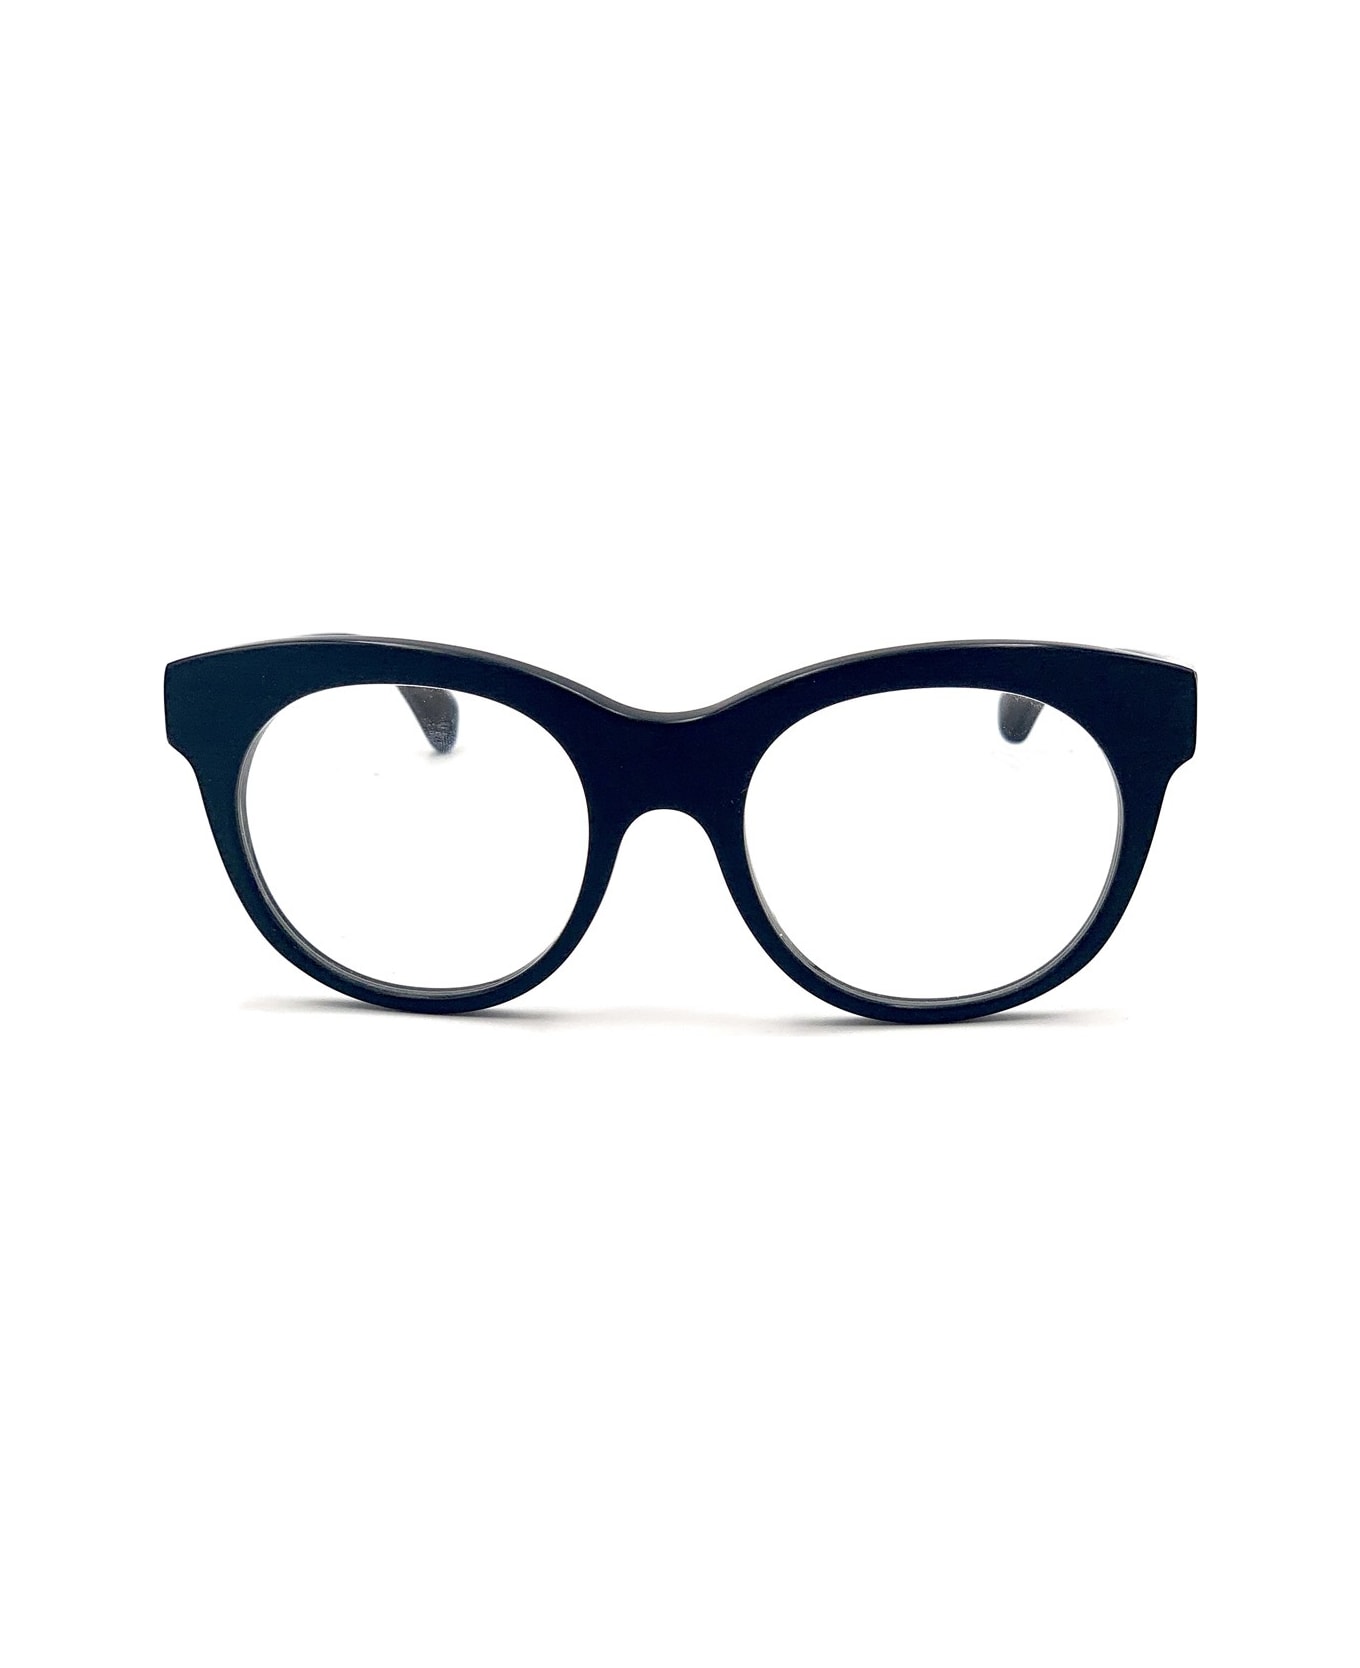 Jacques Durand Port-cros Xl170 Glasses - Nero アイウェア